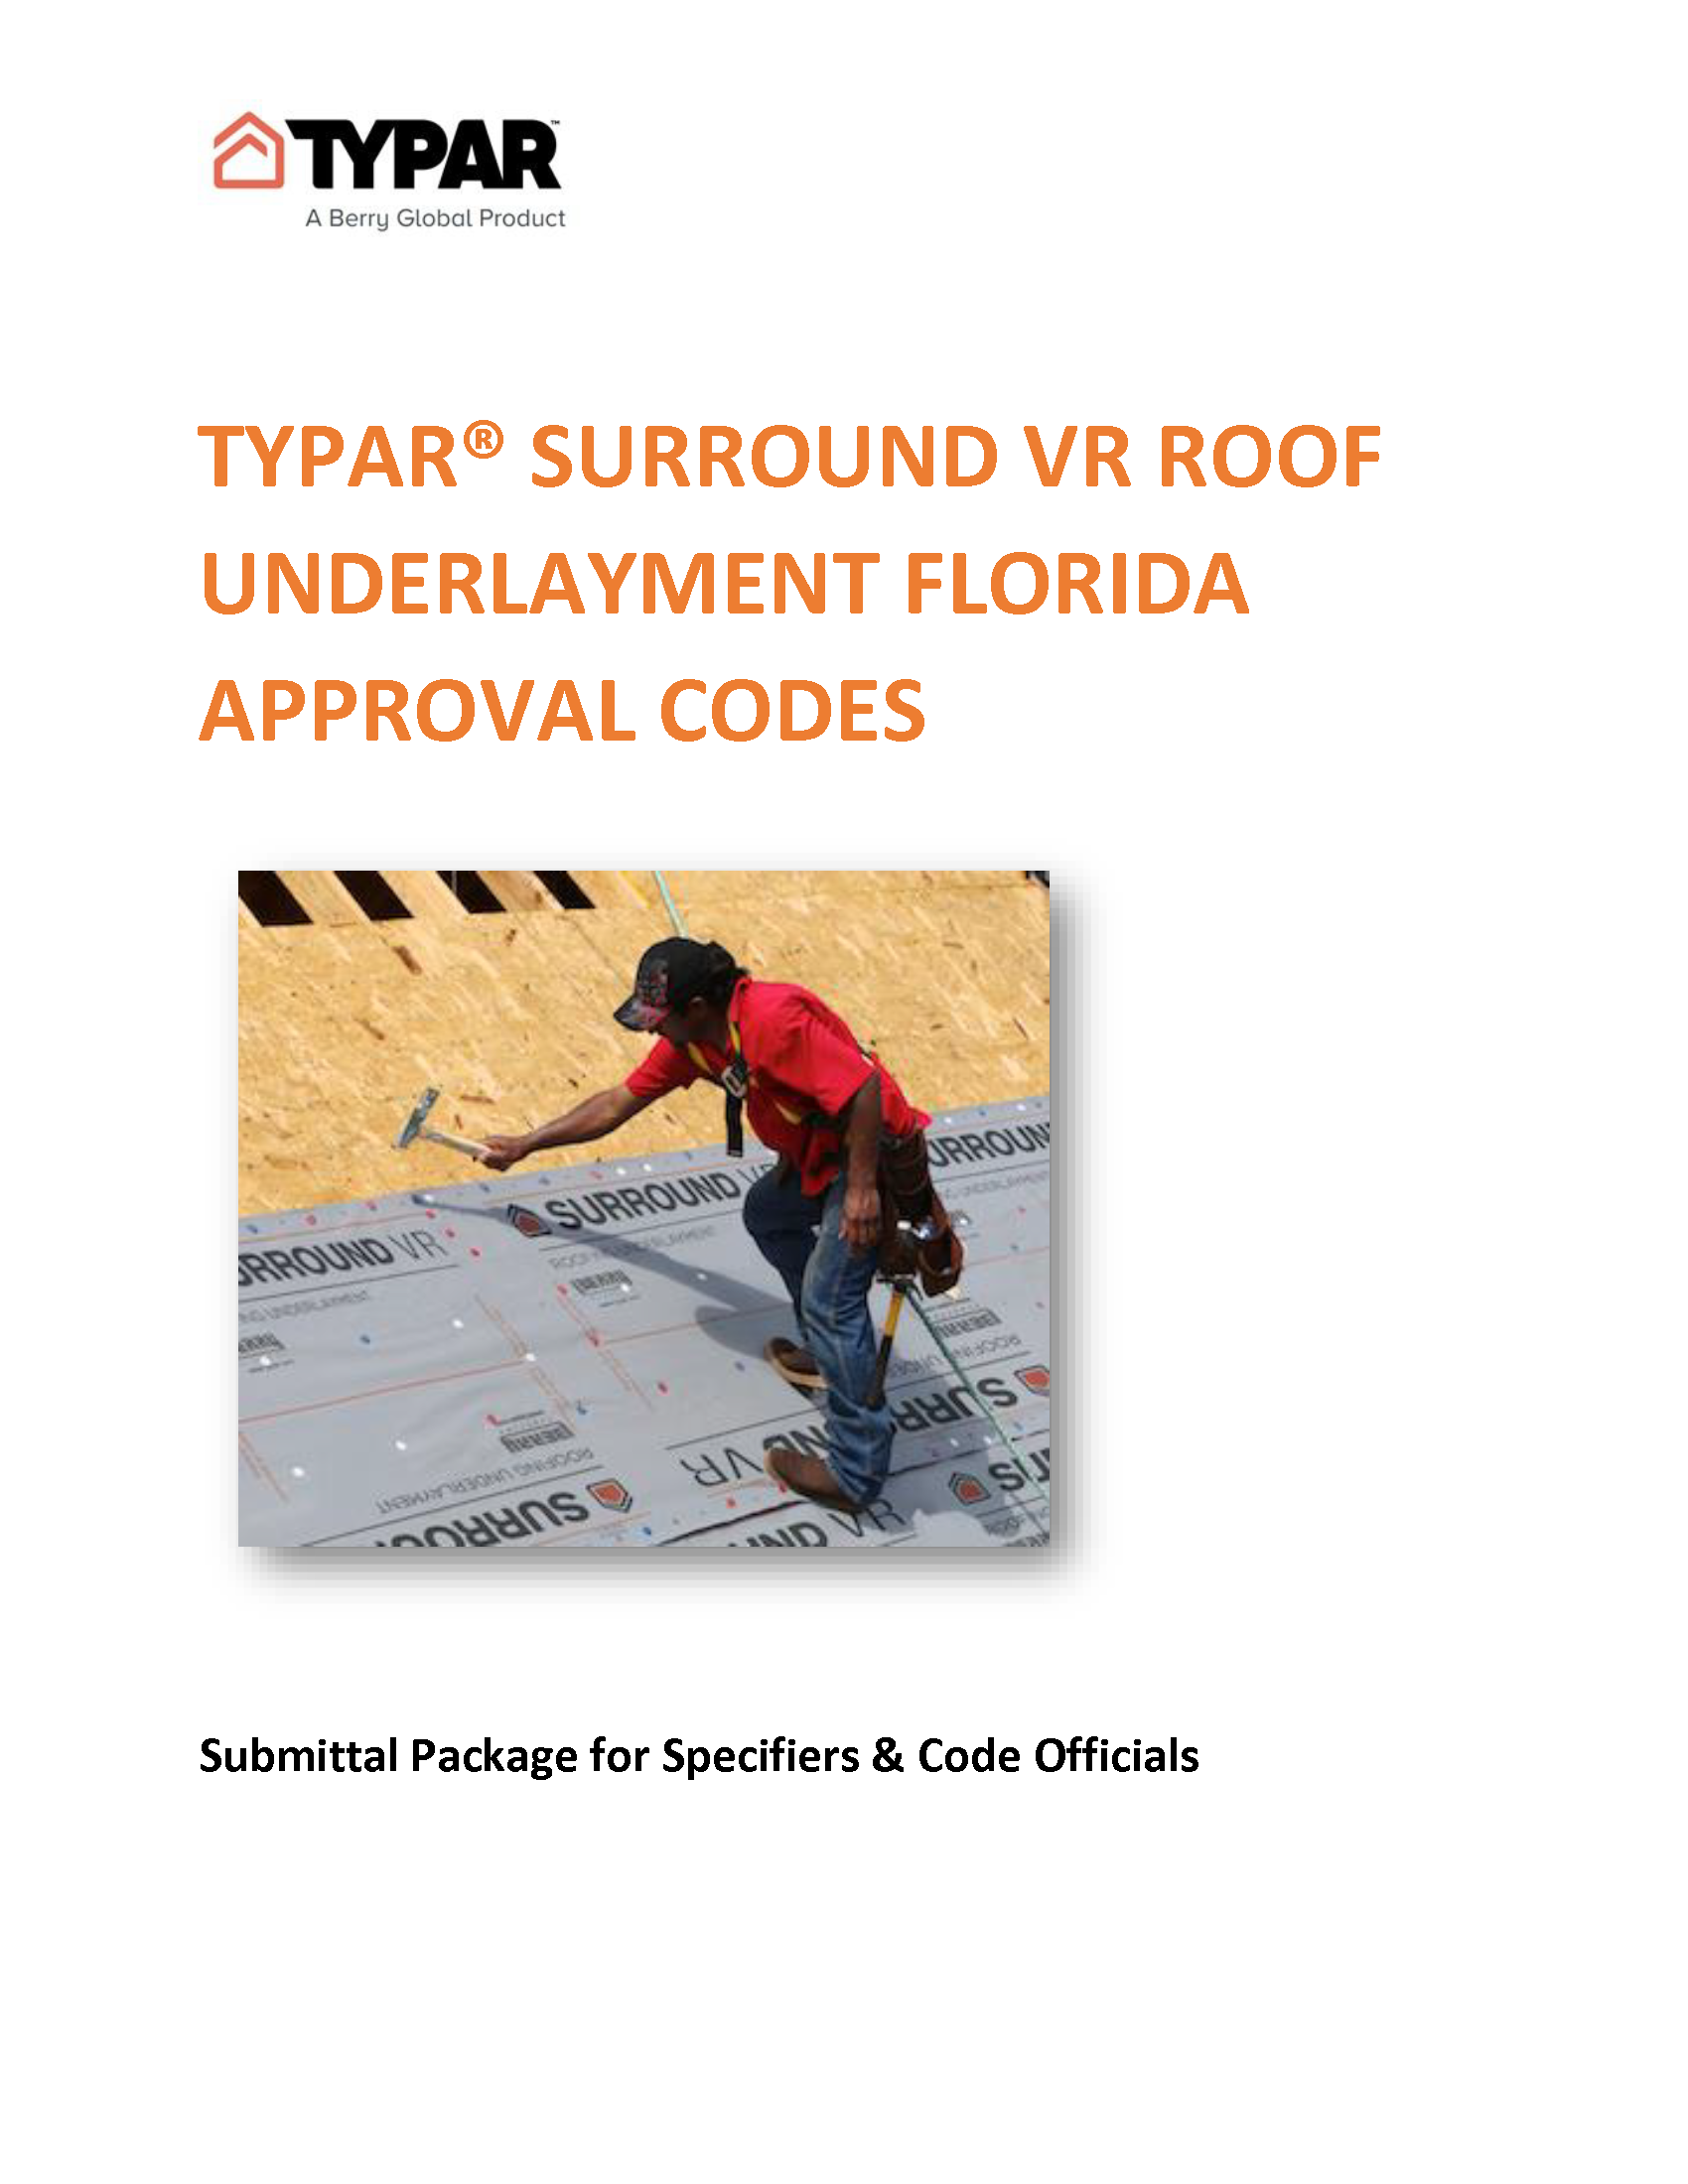 Download Typar Surround VR Roof Underlayment Florida Approval Codes